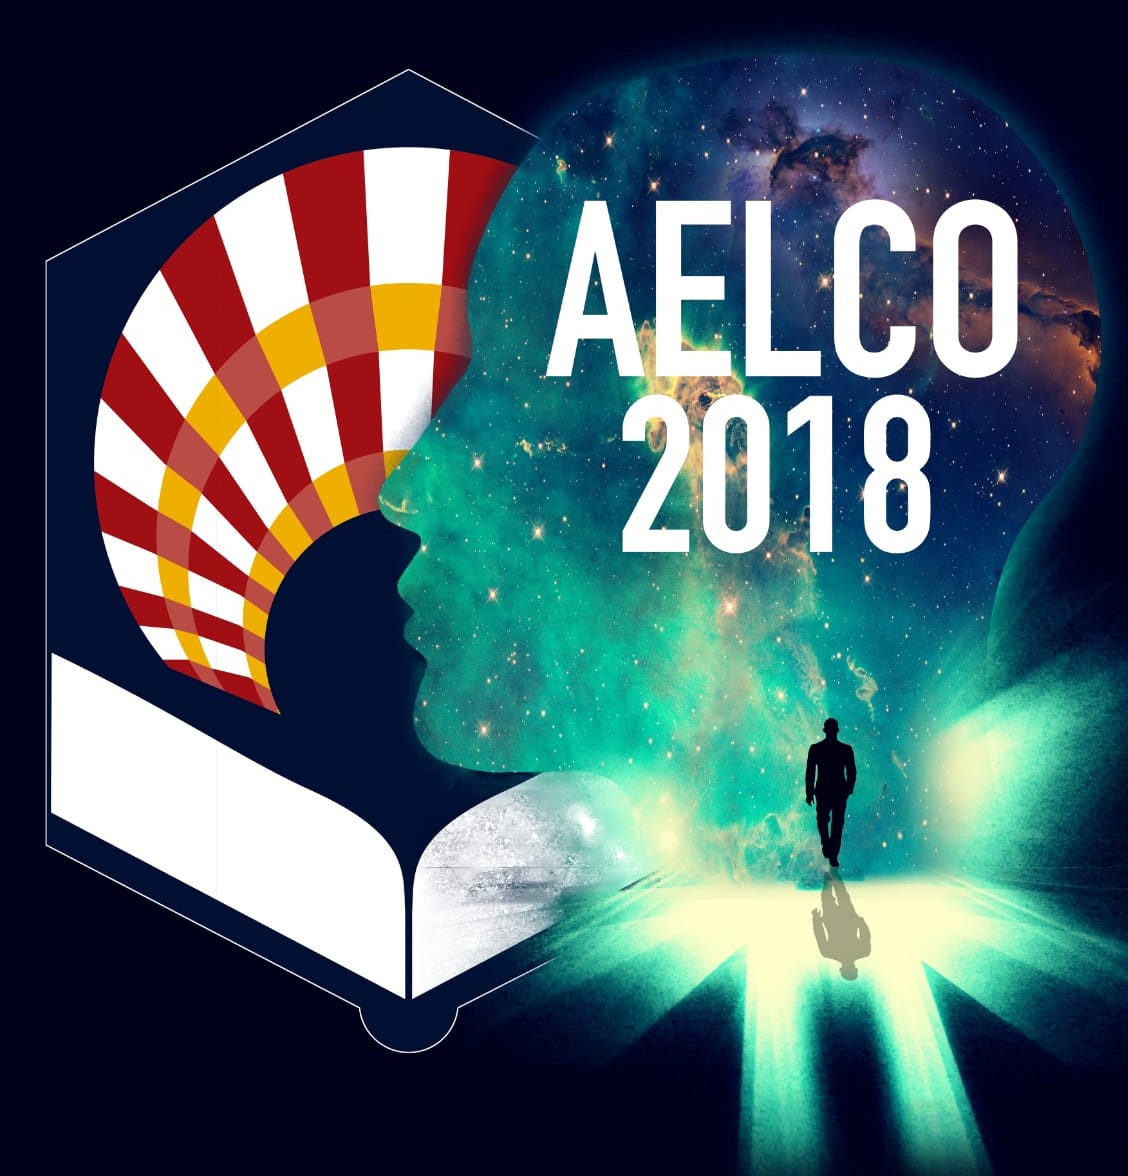 AELCO 2018 LOGO